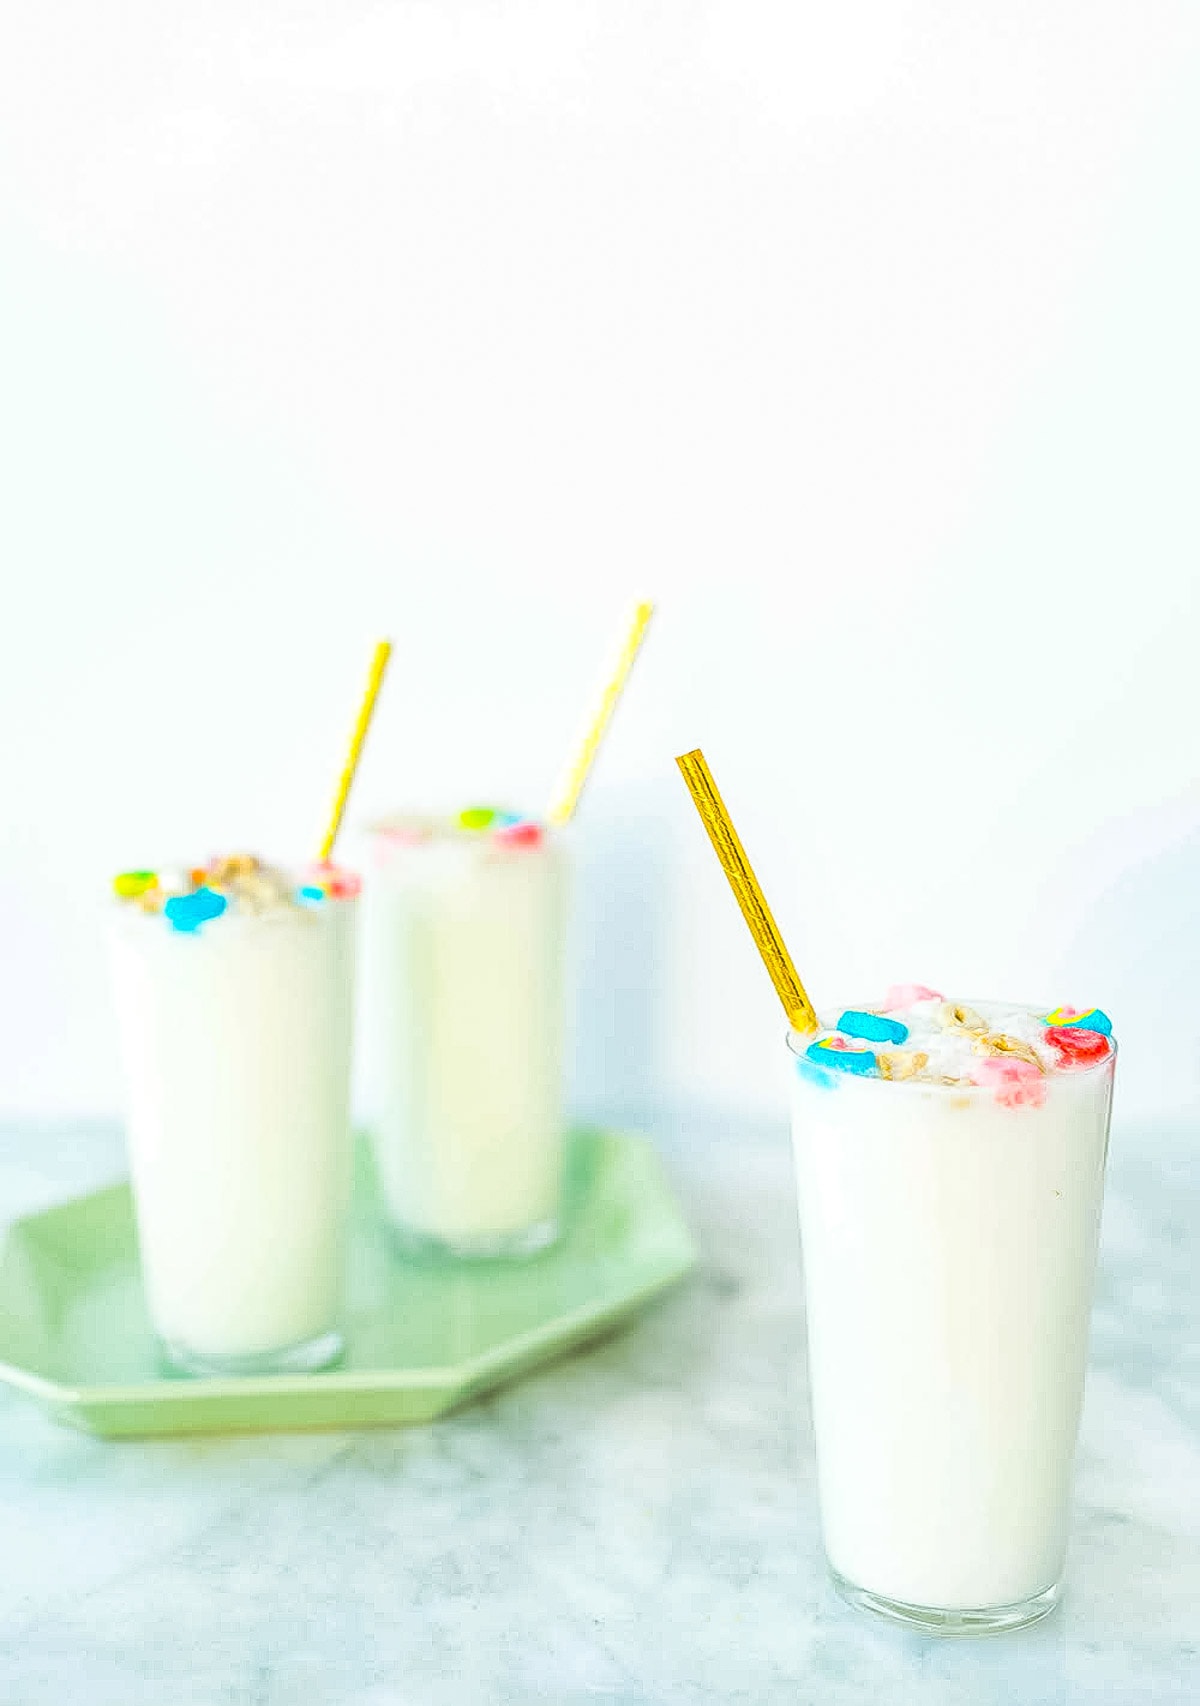 Boozy Cereal Milk Egg Cream by Sugar & Cloth, an award winning DIY, home decor, and recipes blog.